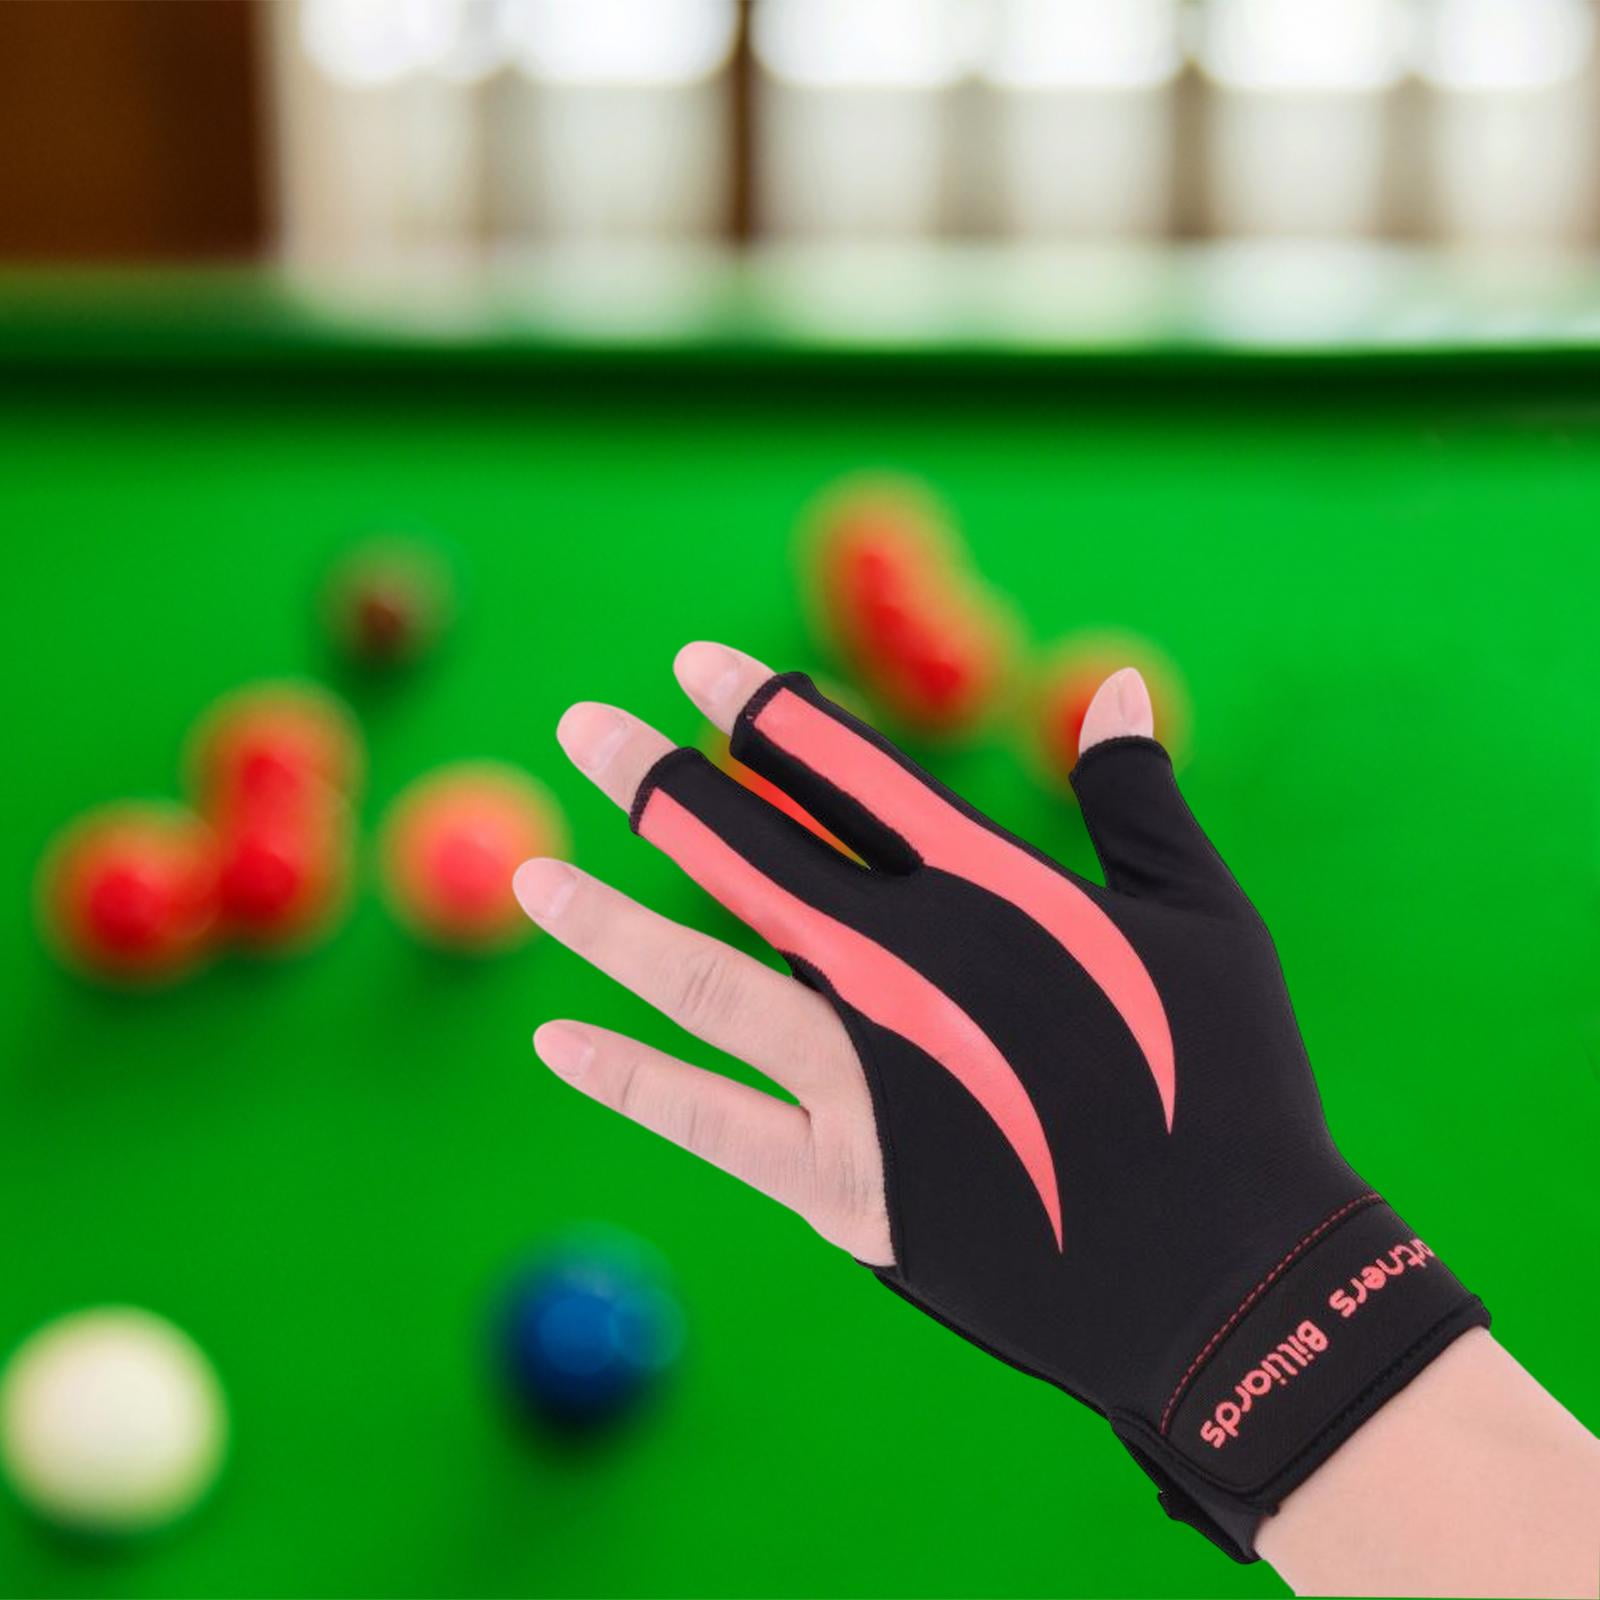 Vaveren Left Hand Snooker Billiard Glove Sport Made of Elasticized Fabric for Amateurs Professionals 